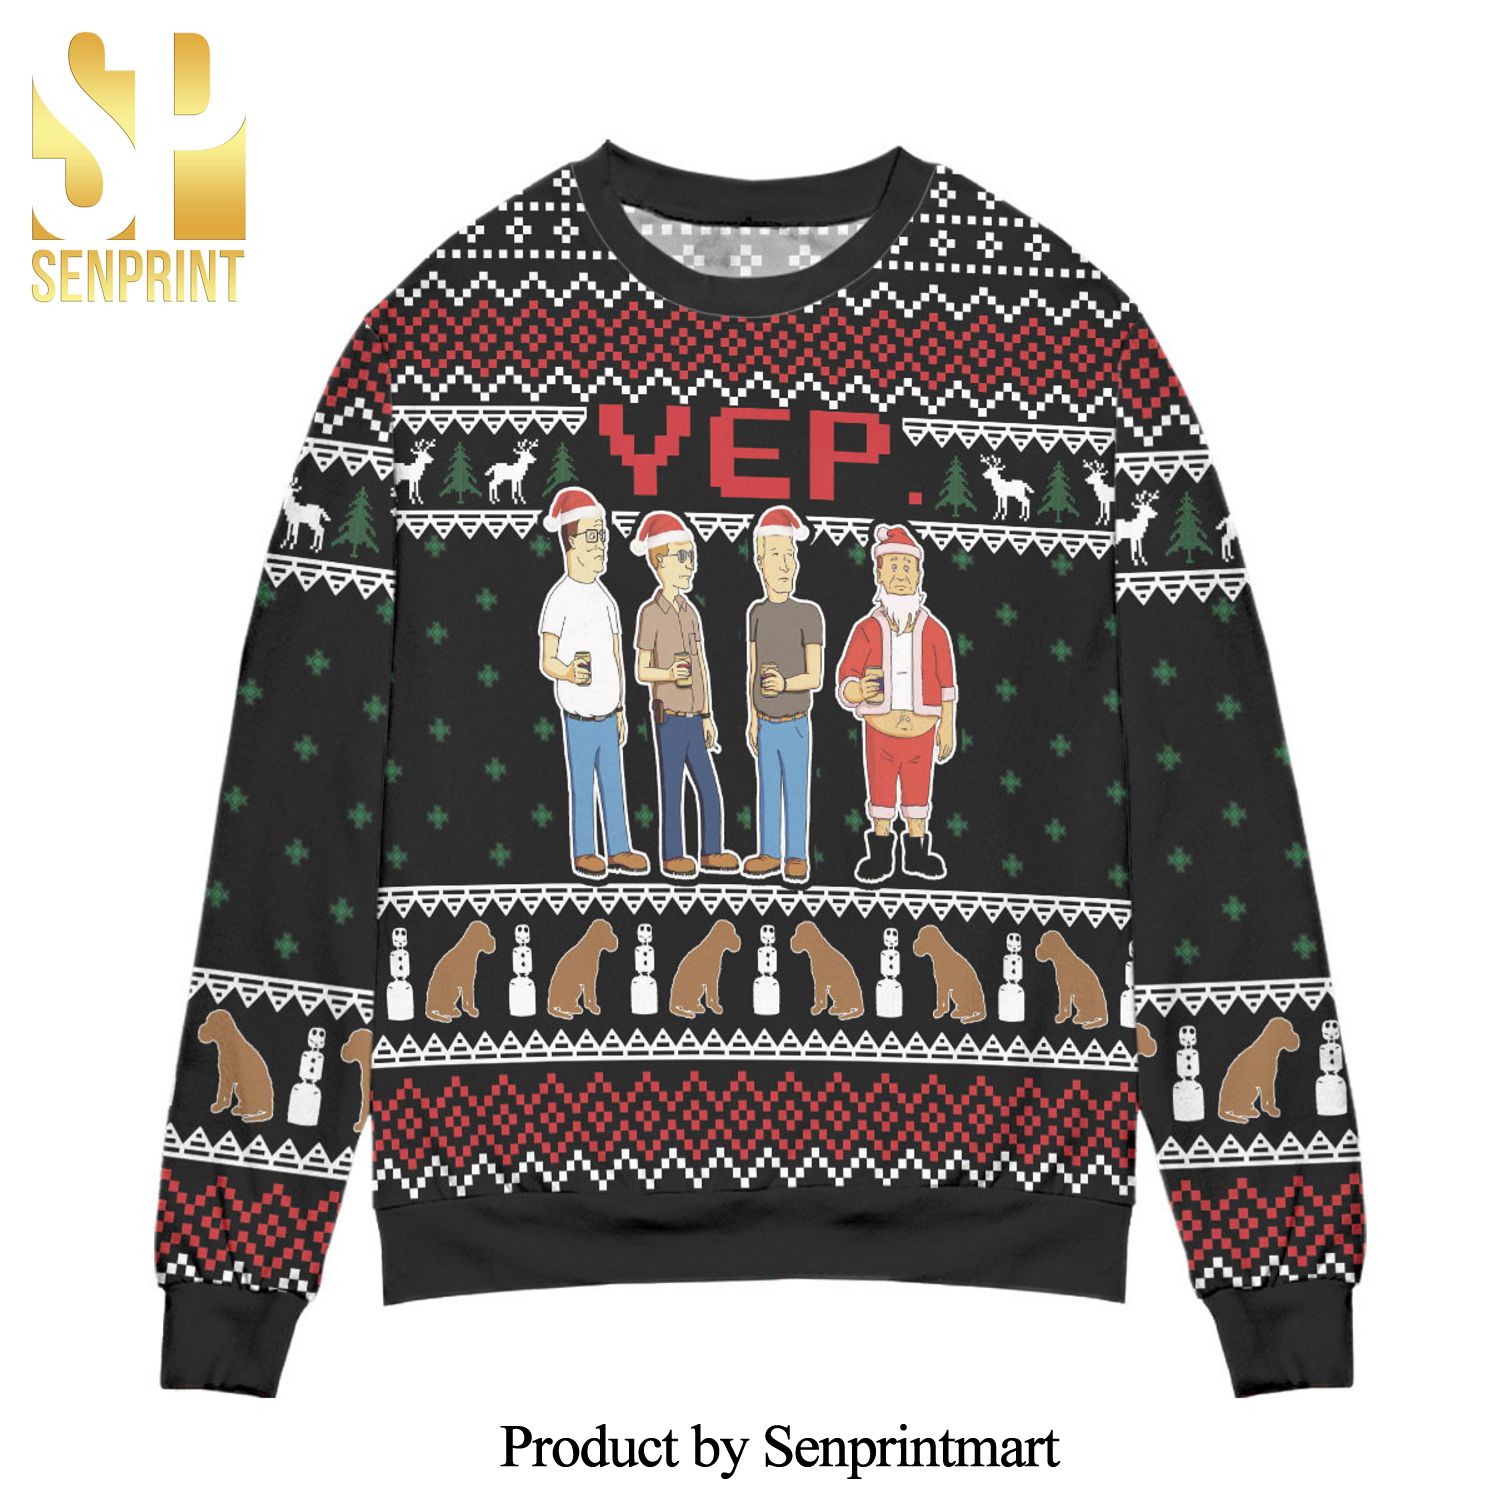 YEP Cartoon Graphics Snowflake Pattern Knitted Ugly Christmas Sweater – Black